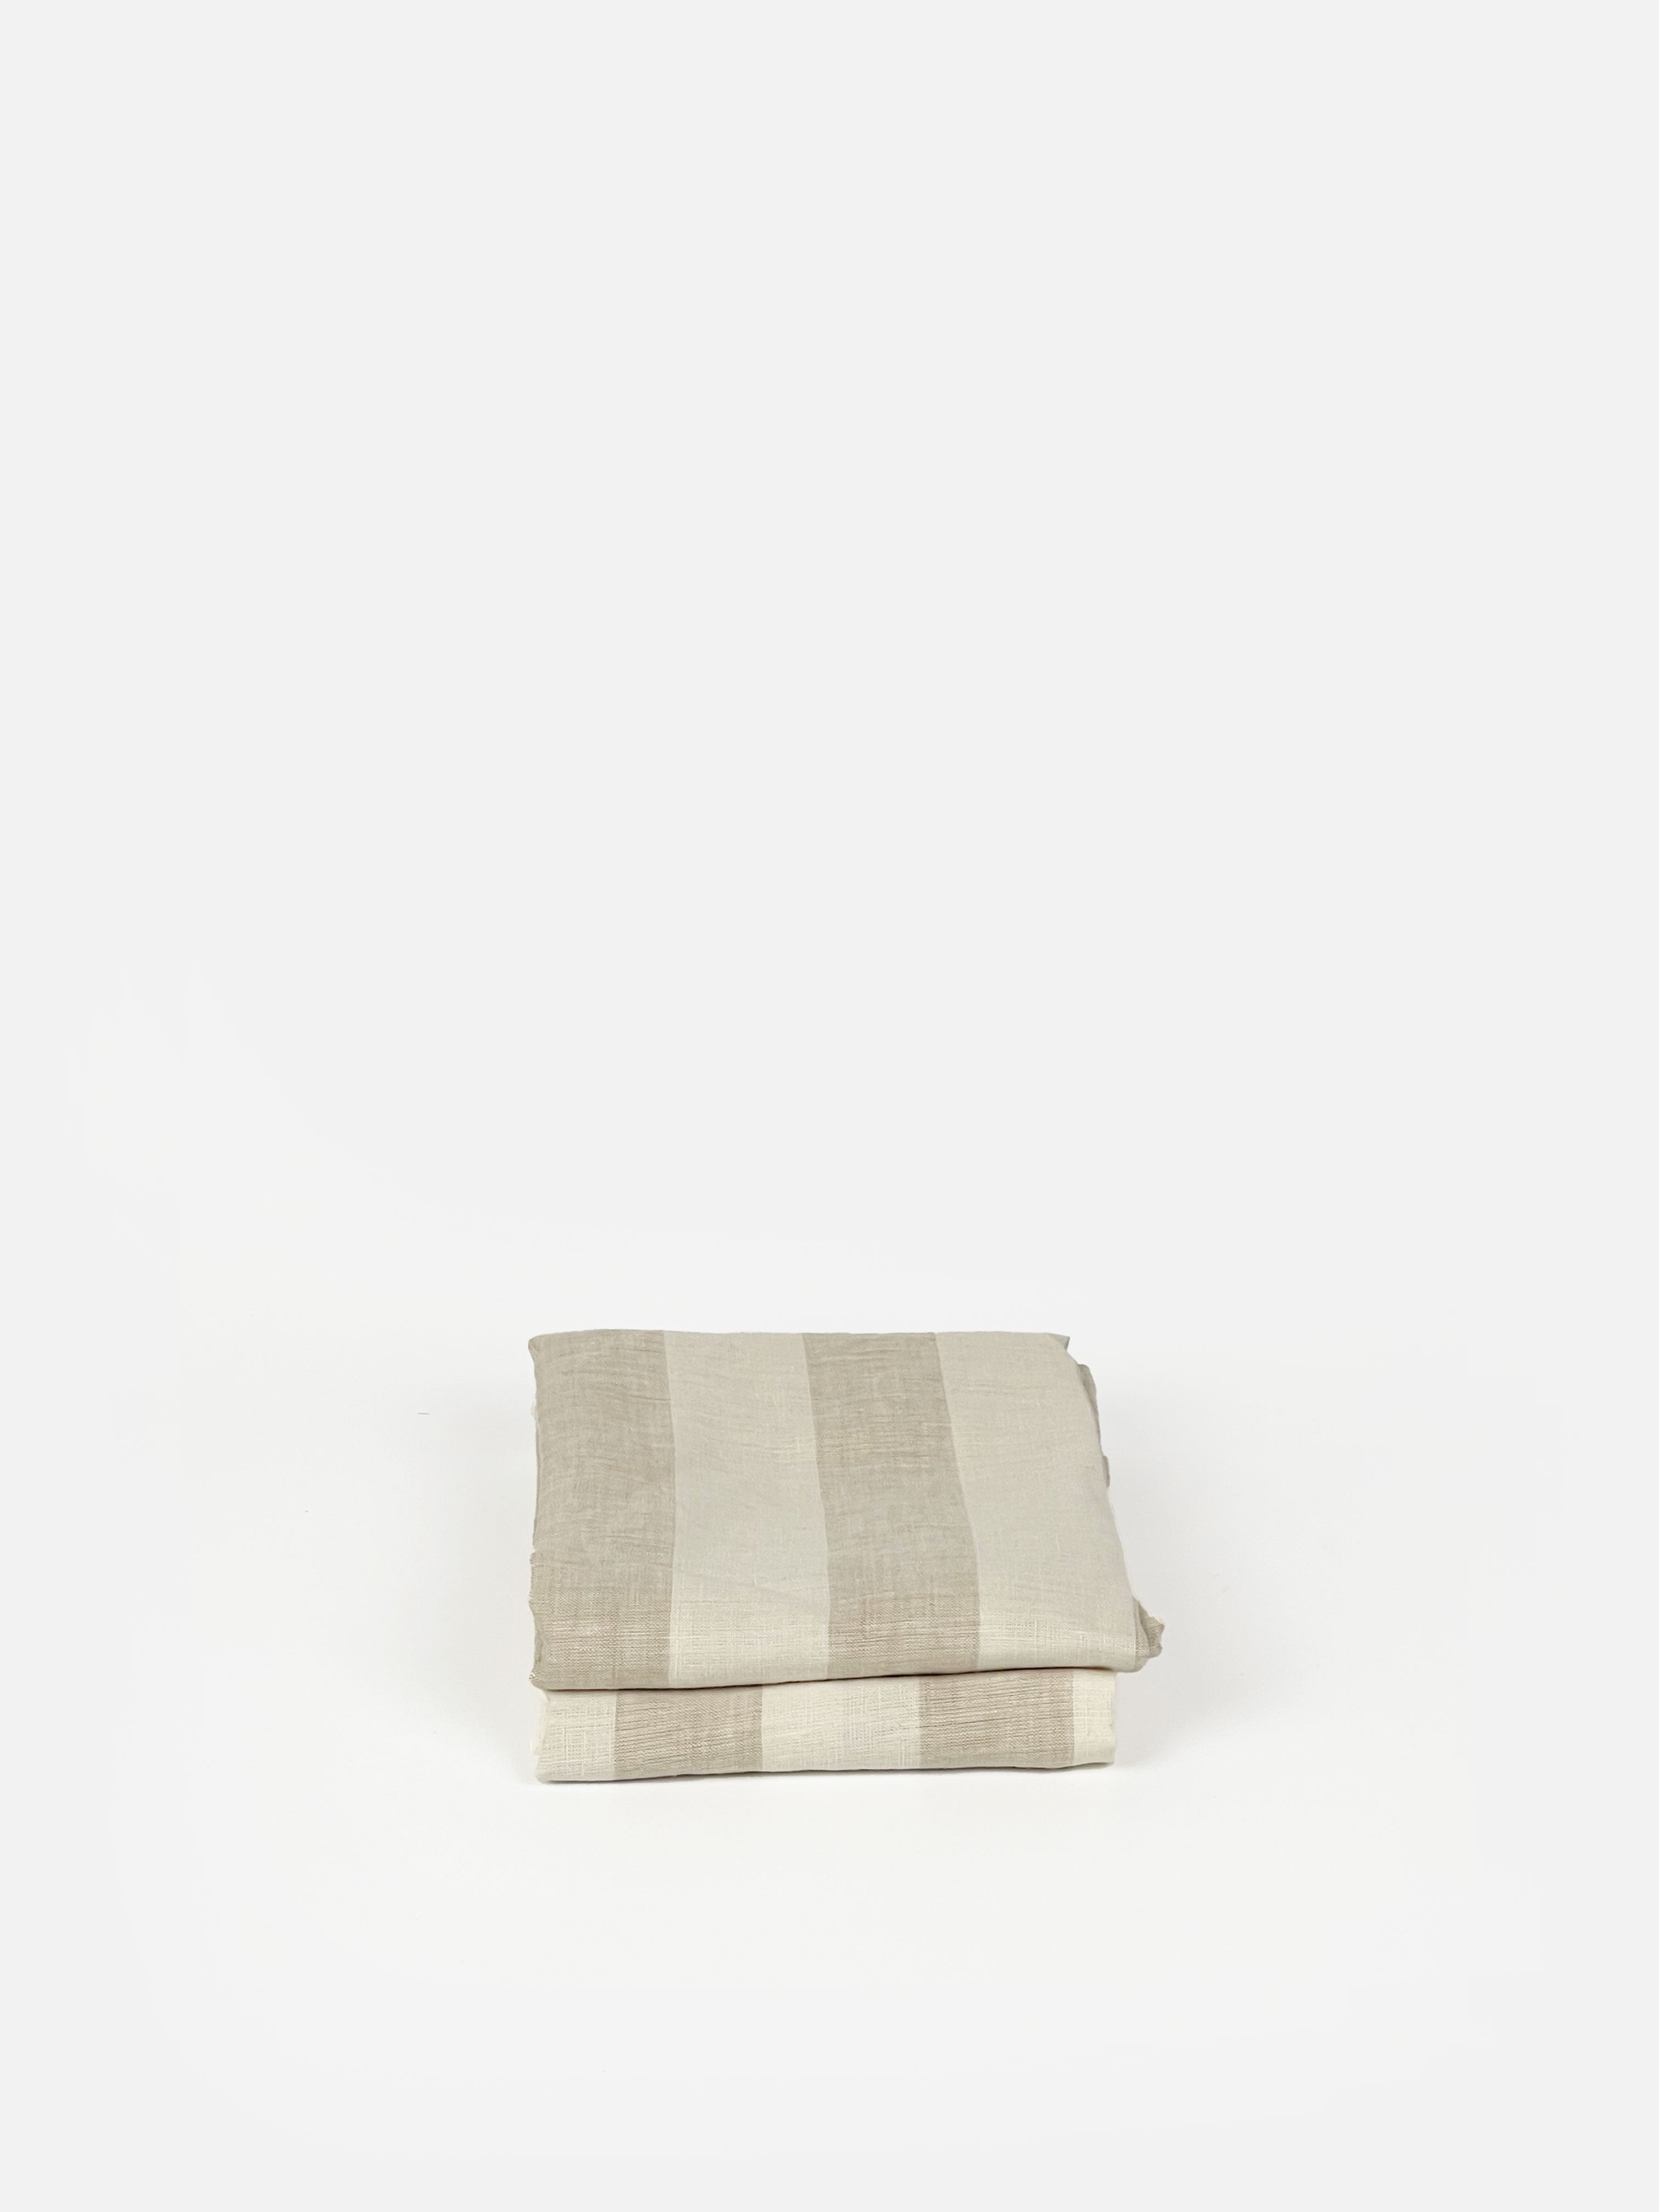 French Flax Linen Tea Towel Set